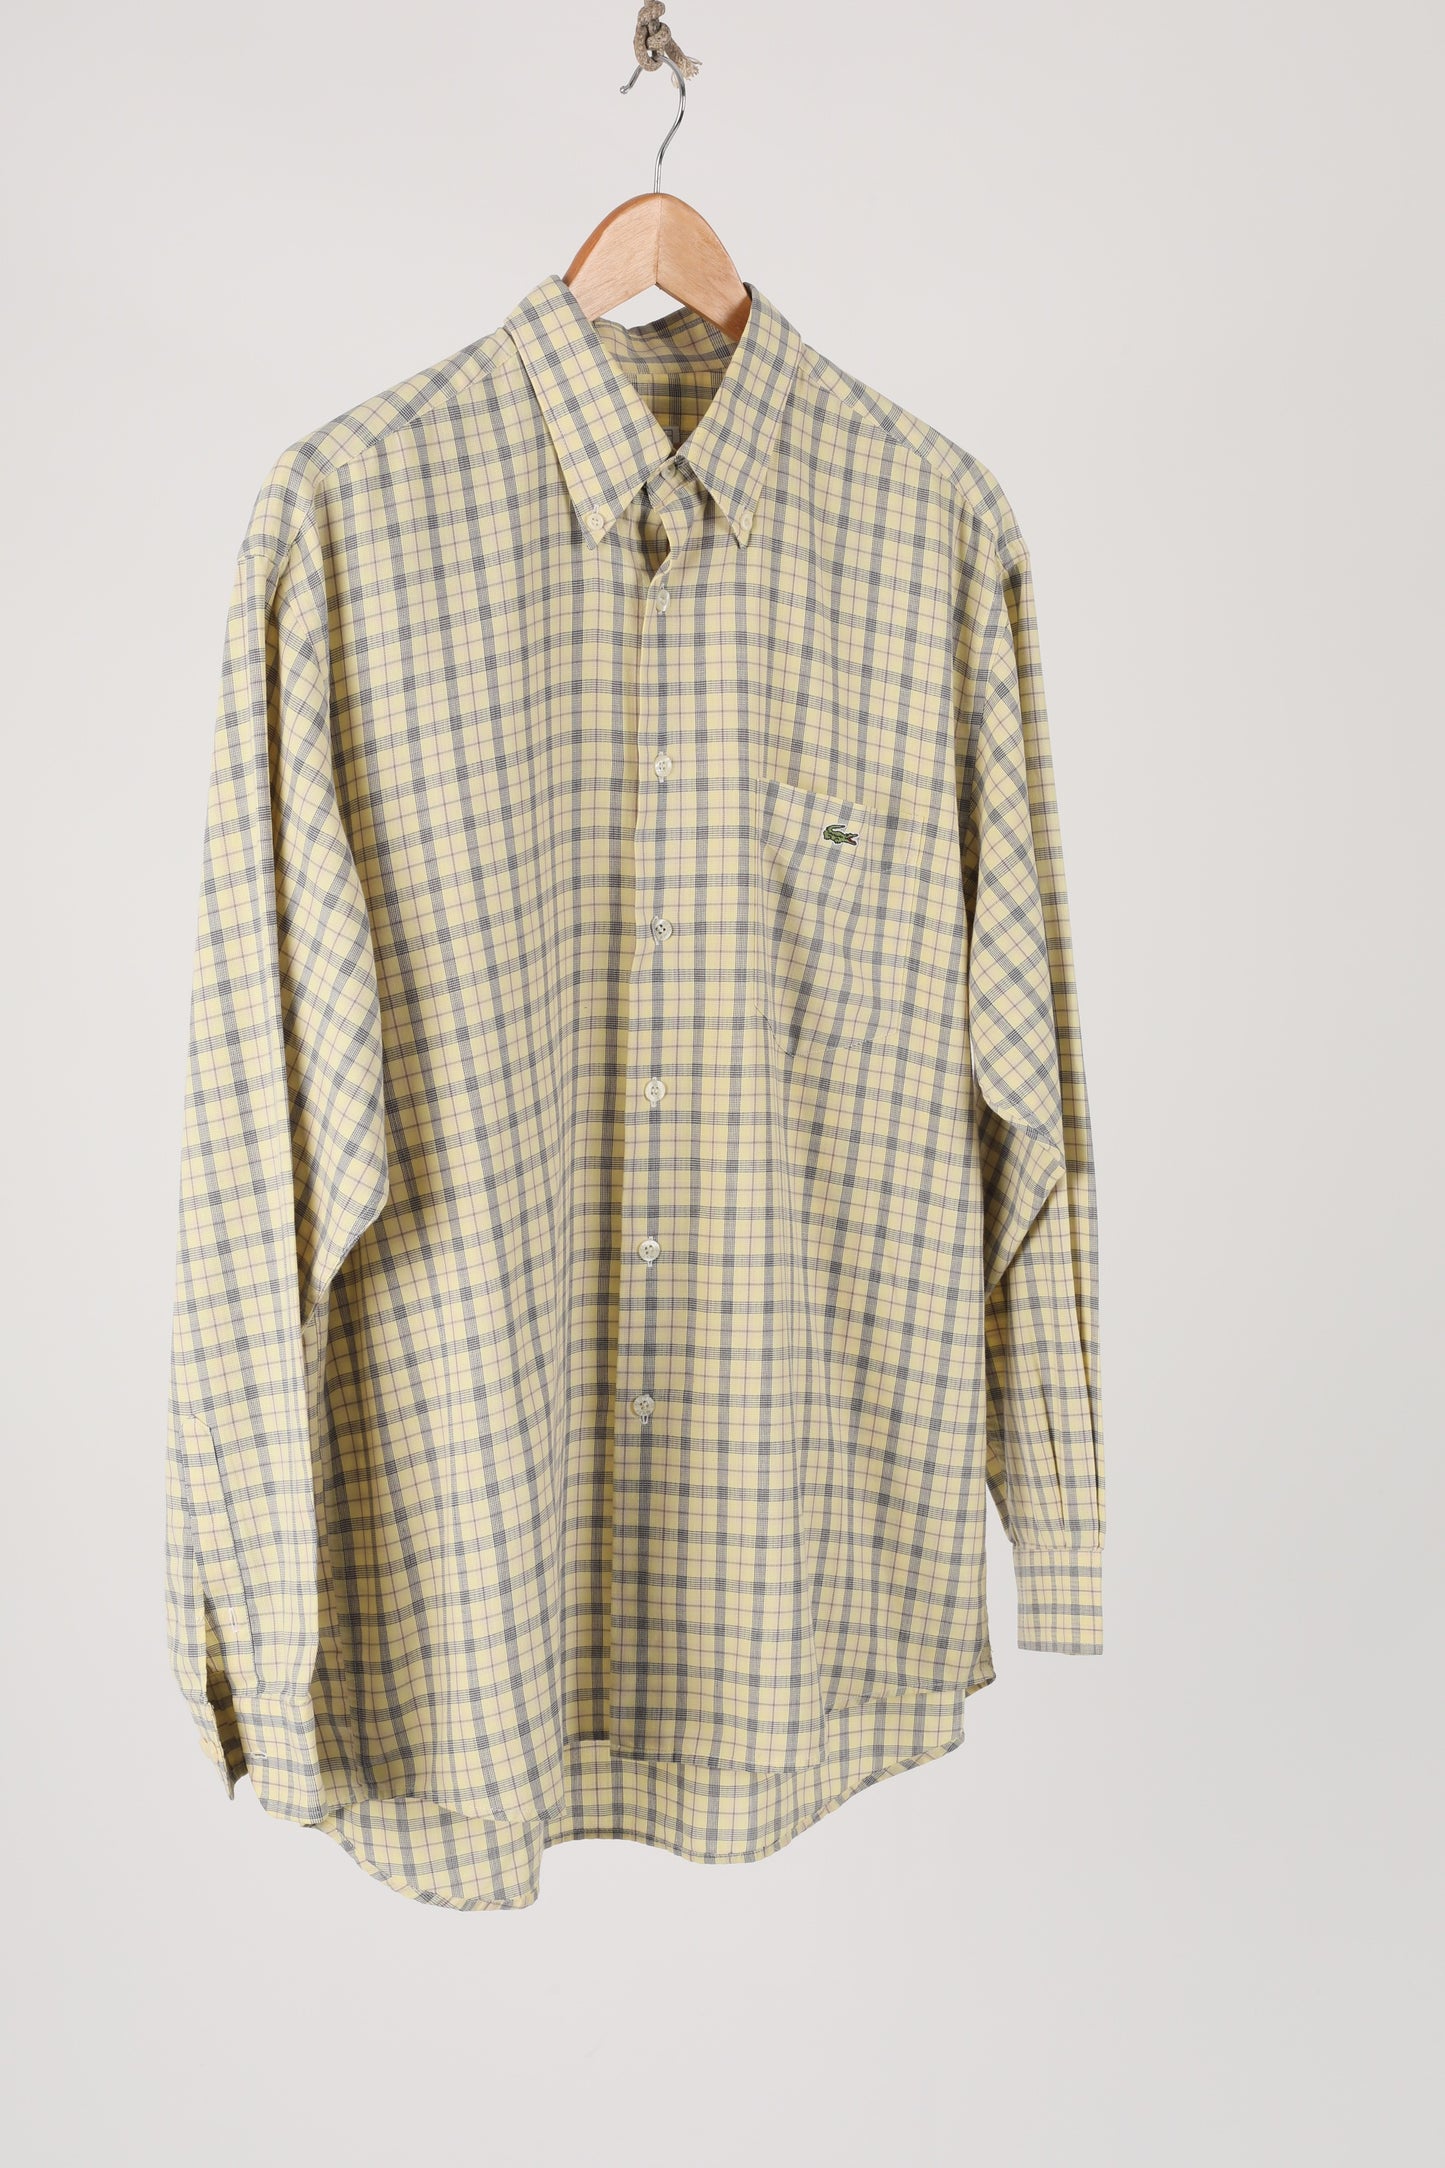 90s Lacoste Oxford shirt (L)